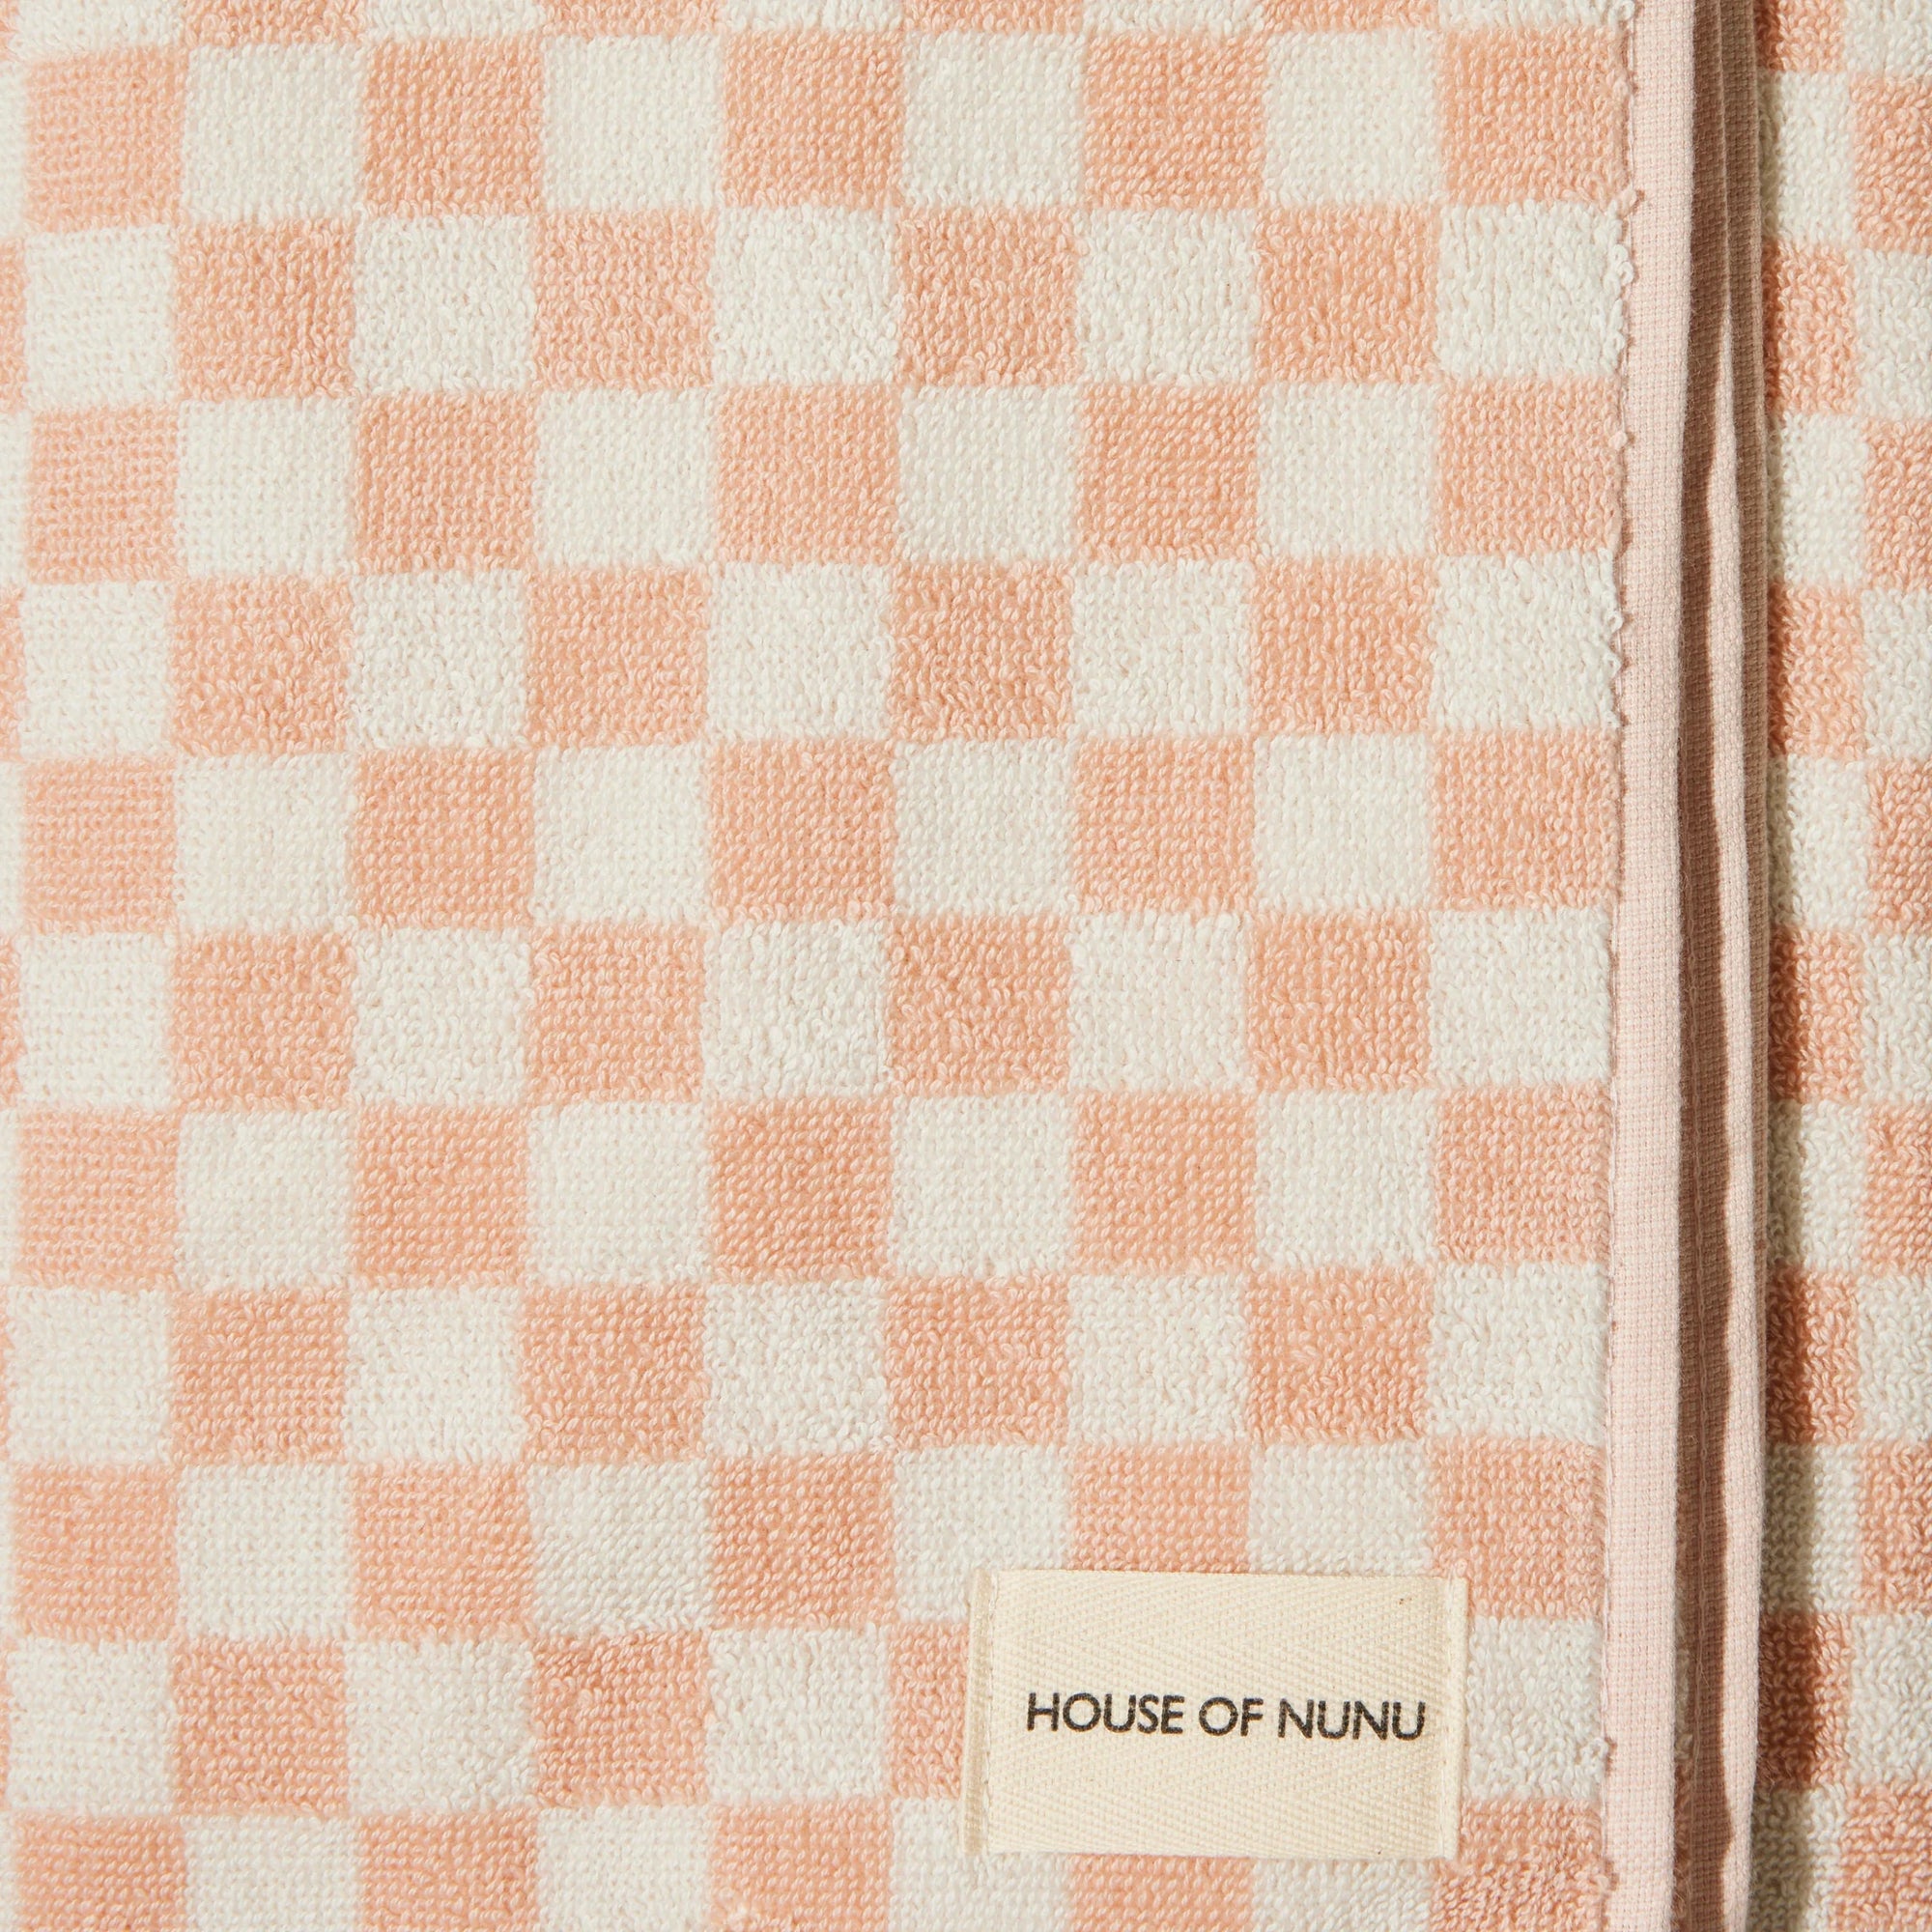 HOUSE OF NUNU BATH TOWEL: PINK CHECK